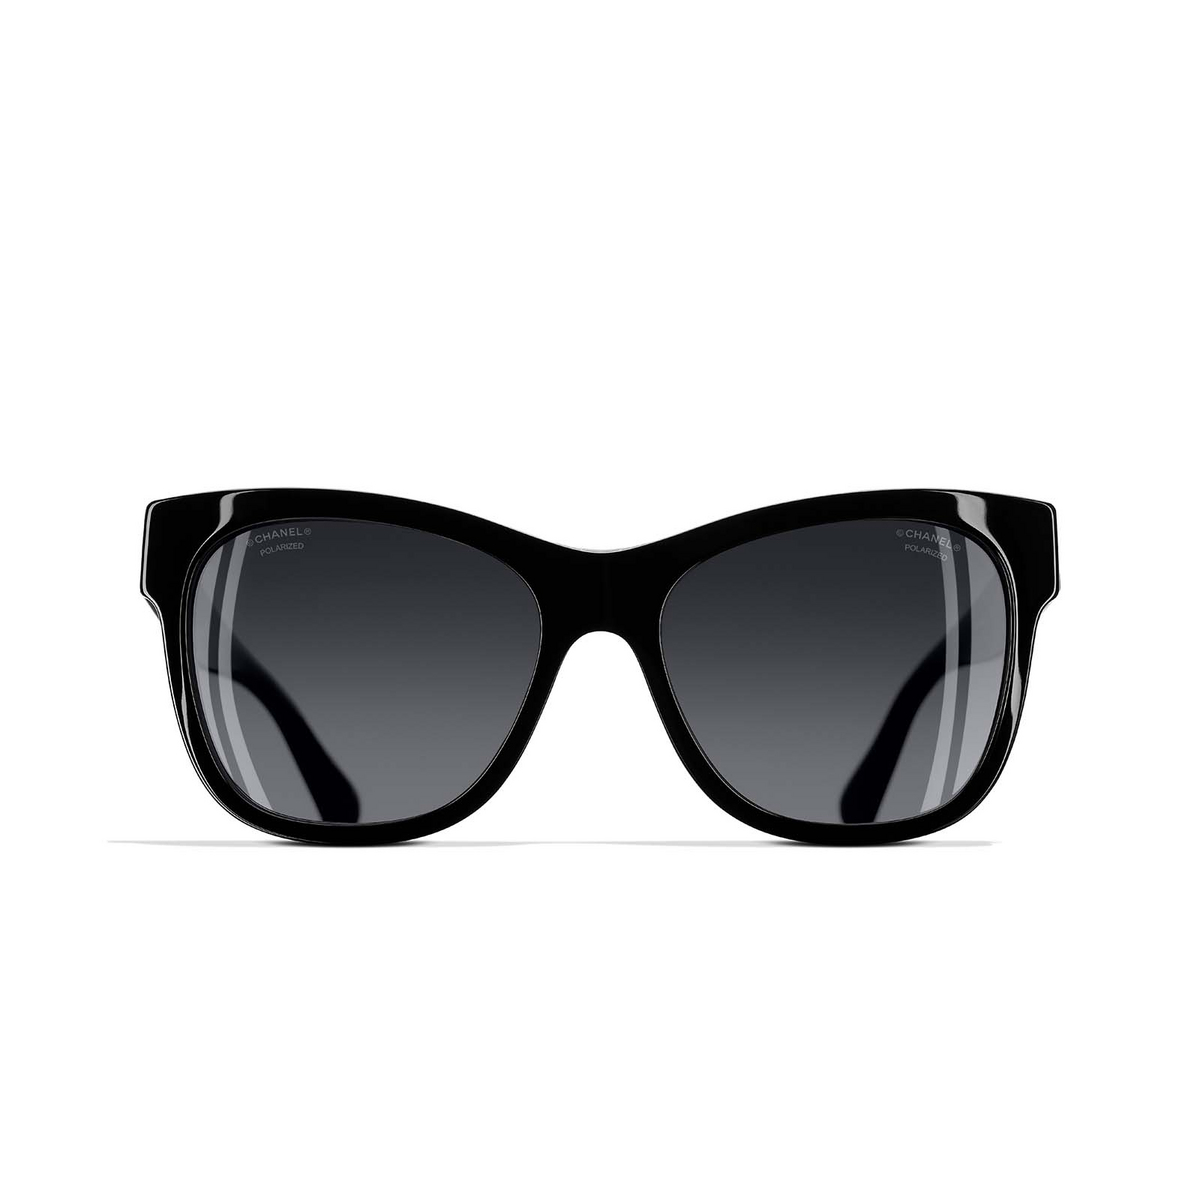 CHANEL square Sunglasses C501S8 Black - front view